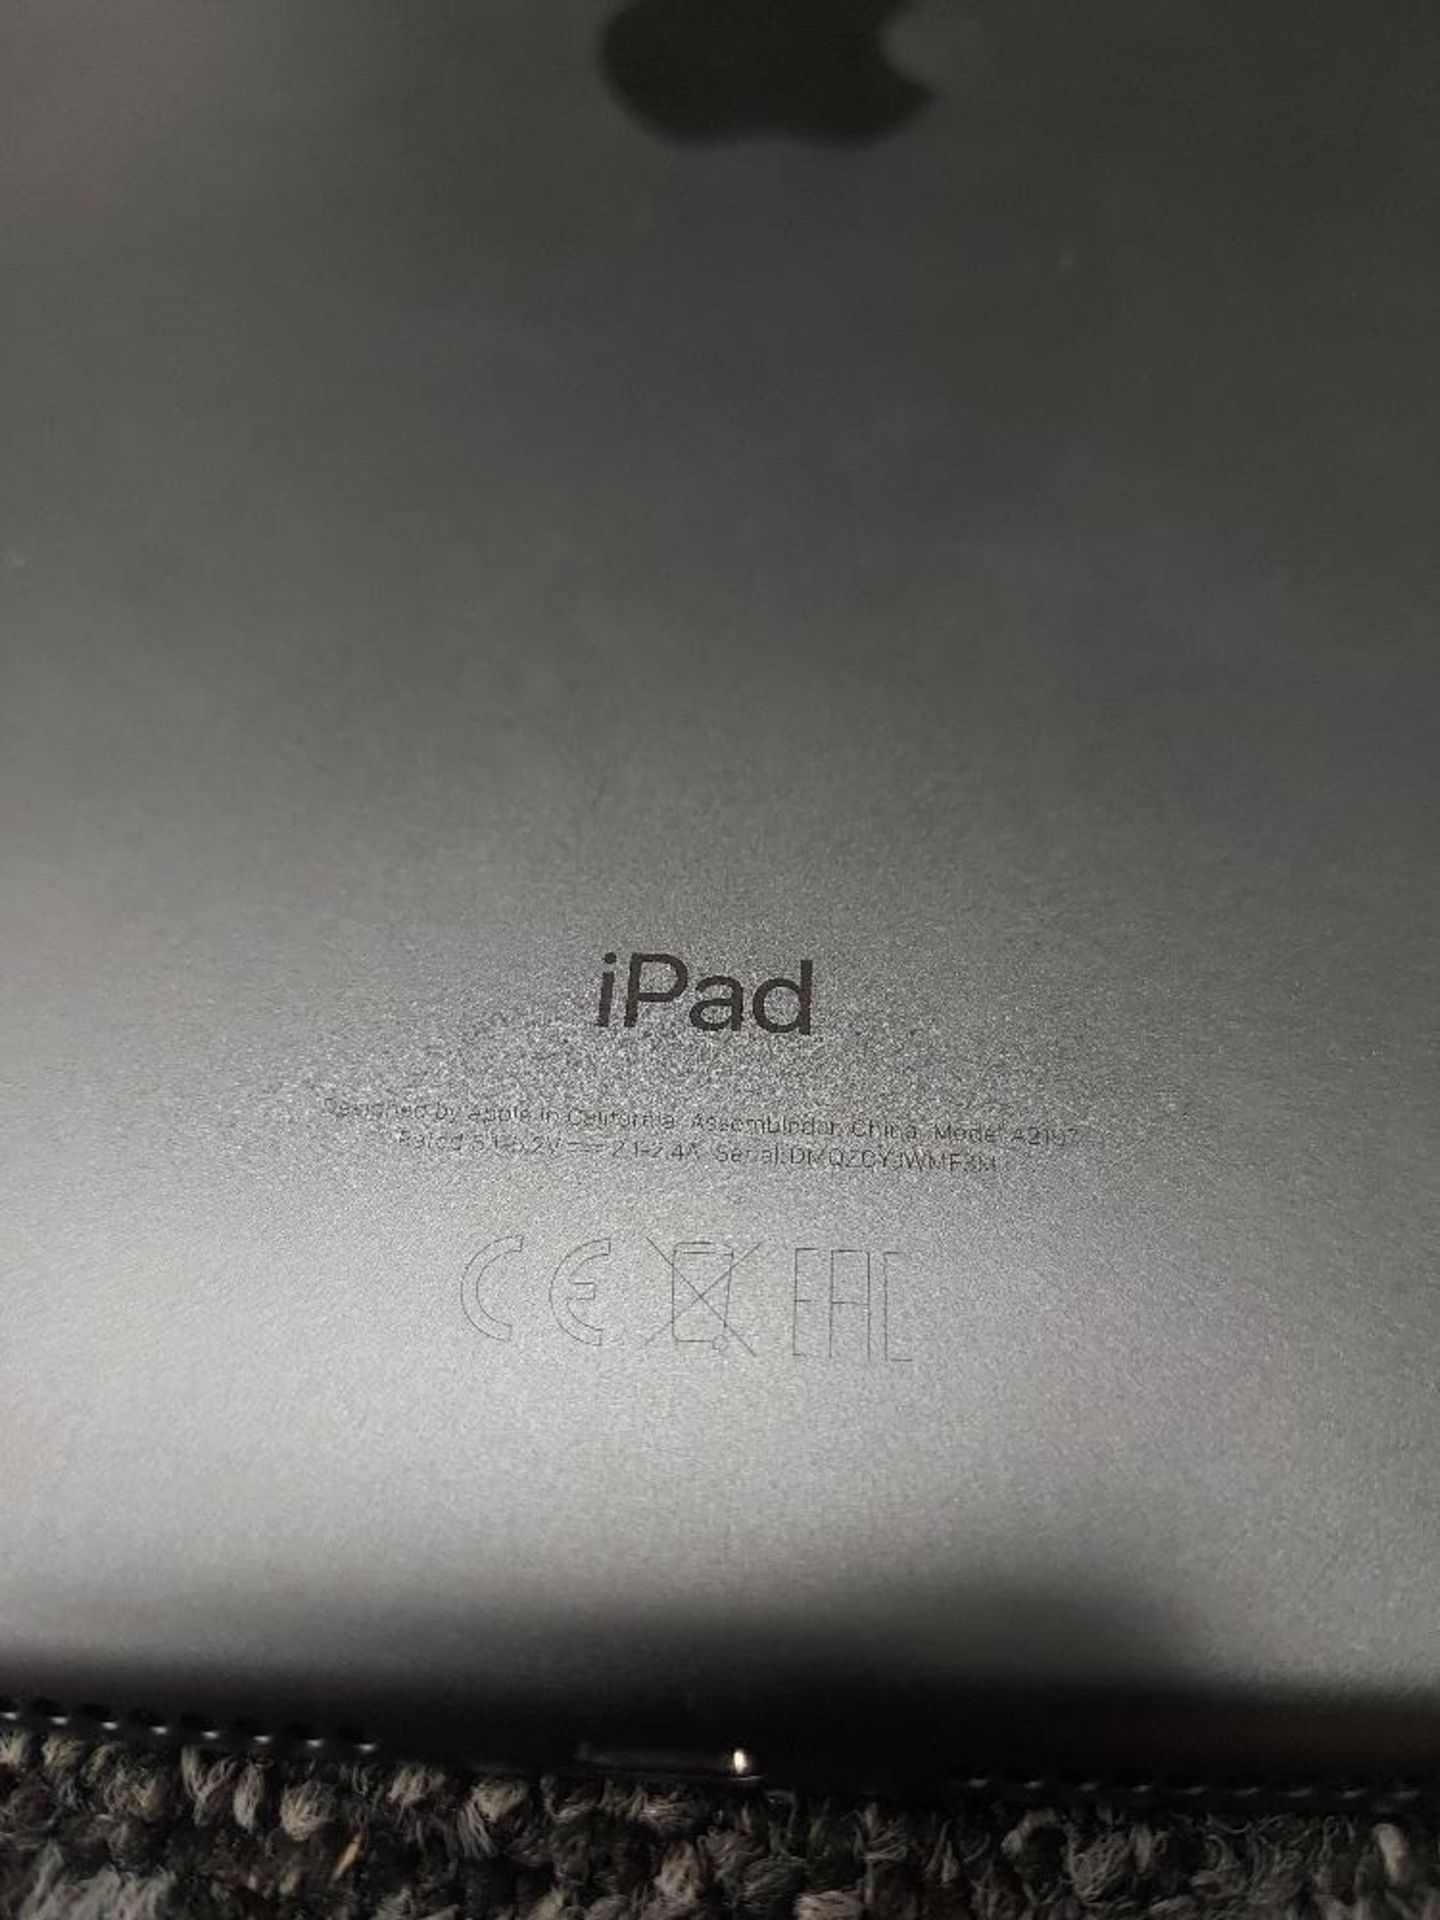 Apple iPad A2198 - Image 3 of 3